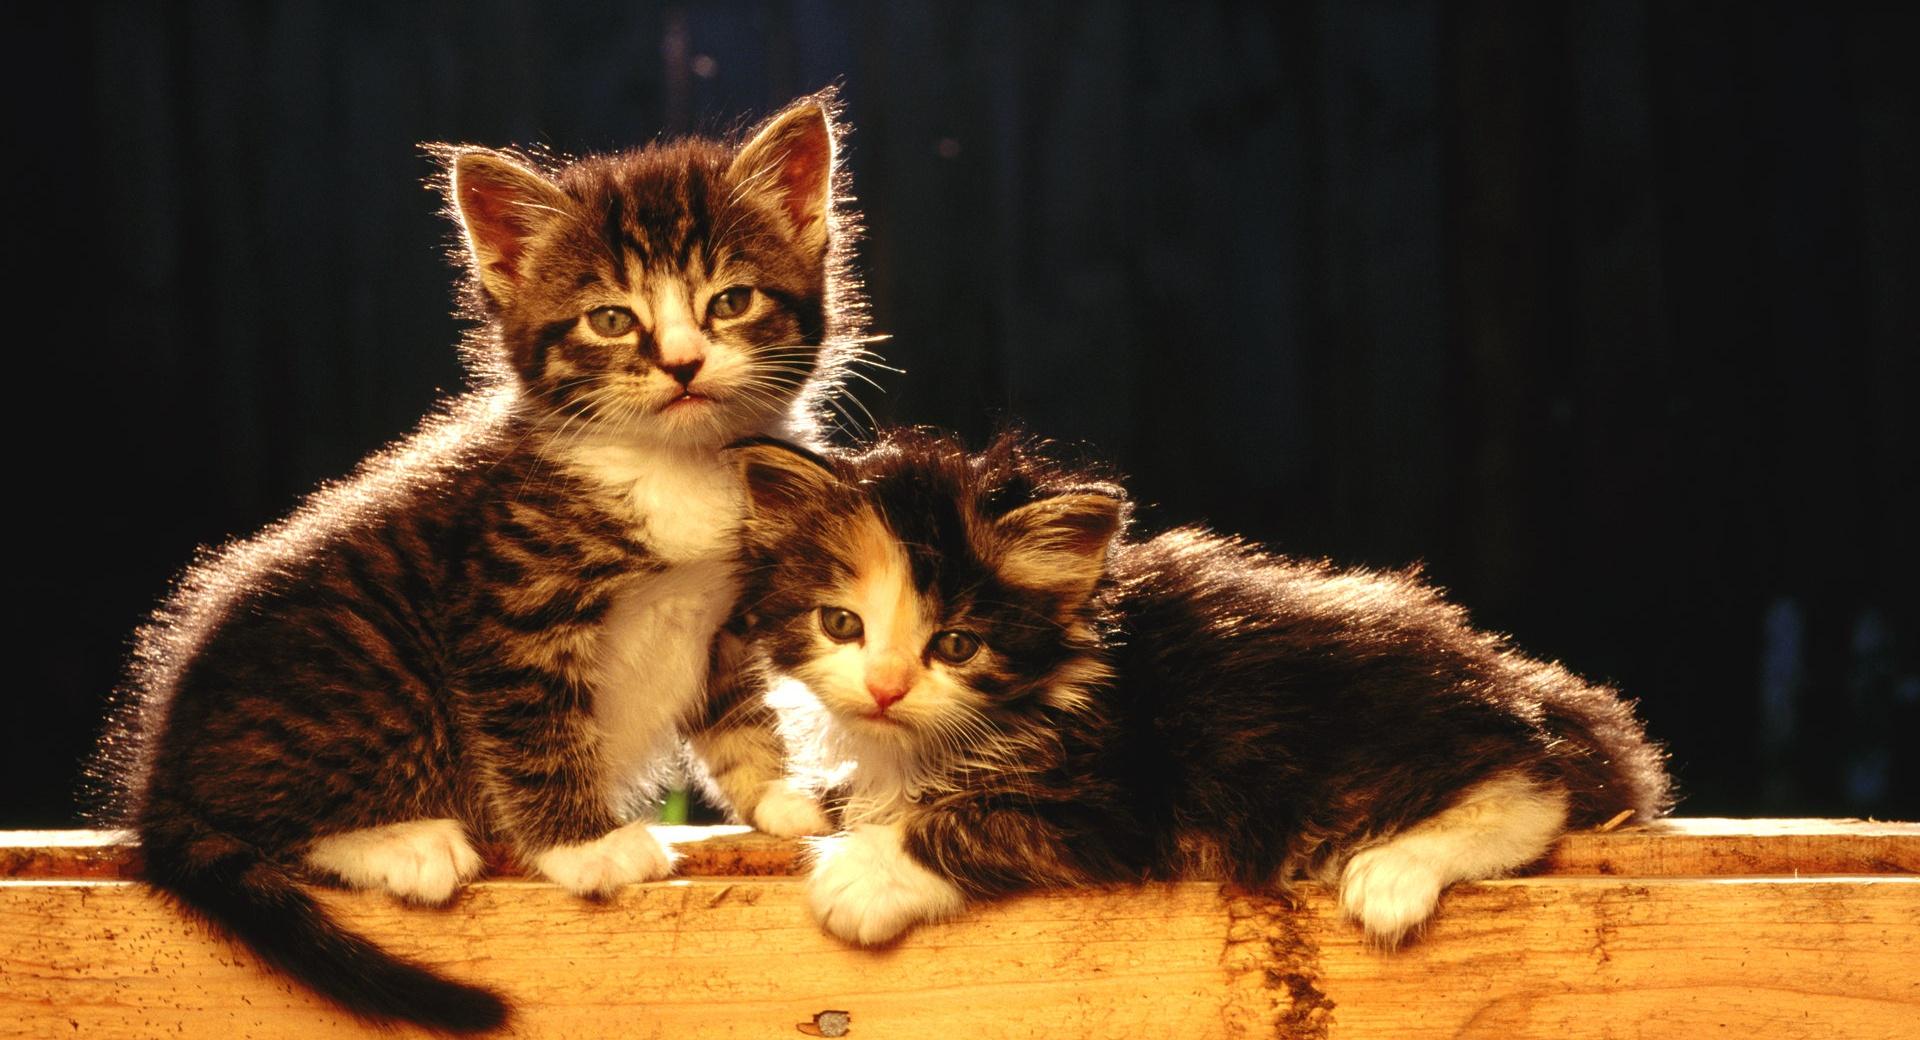 Cute Newborn Kittens at 1024 x 768 size wallpapers HD quality